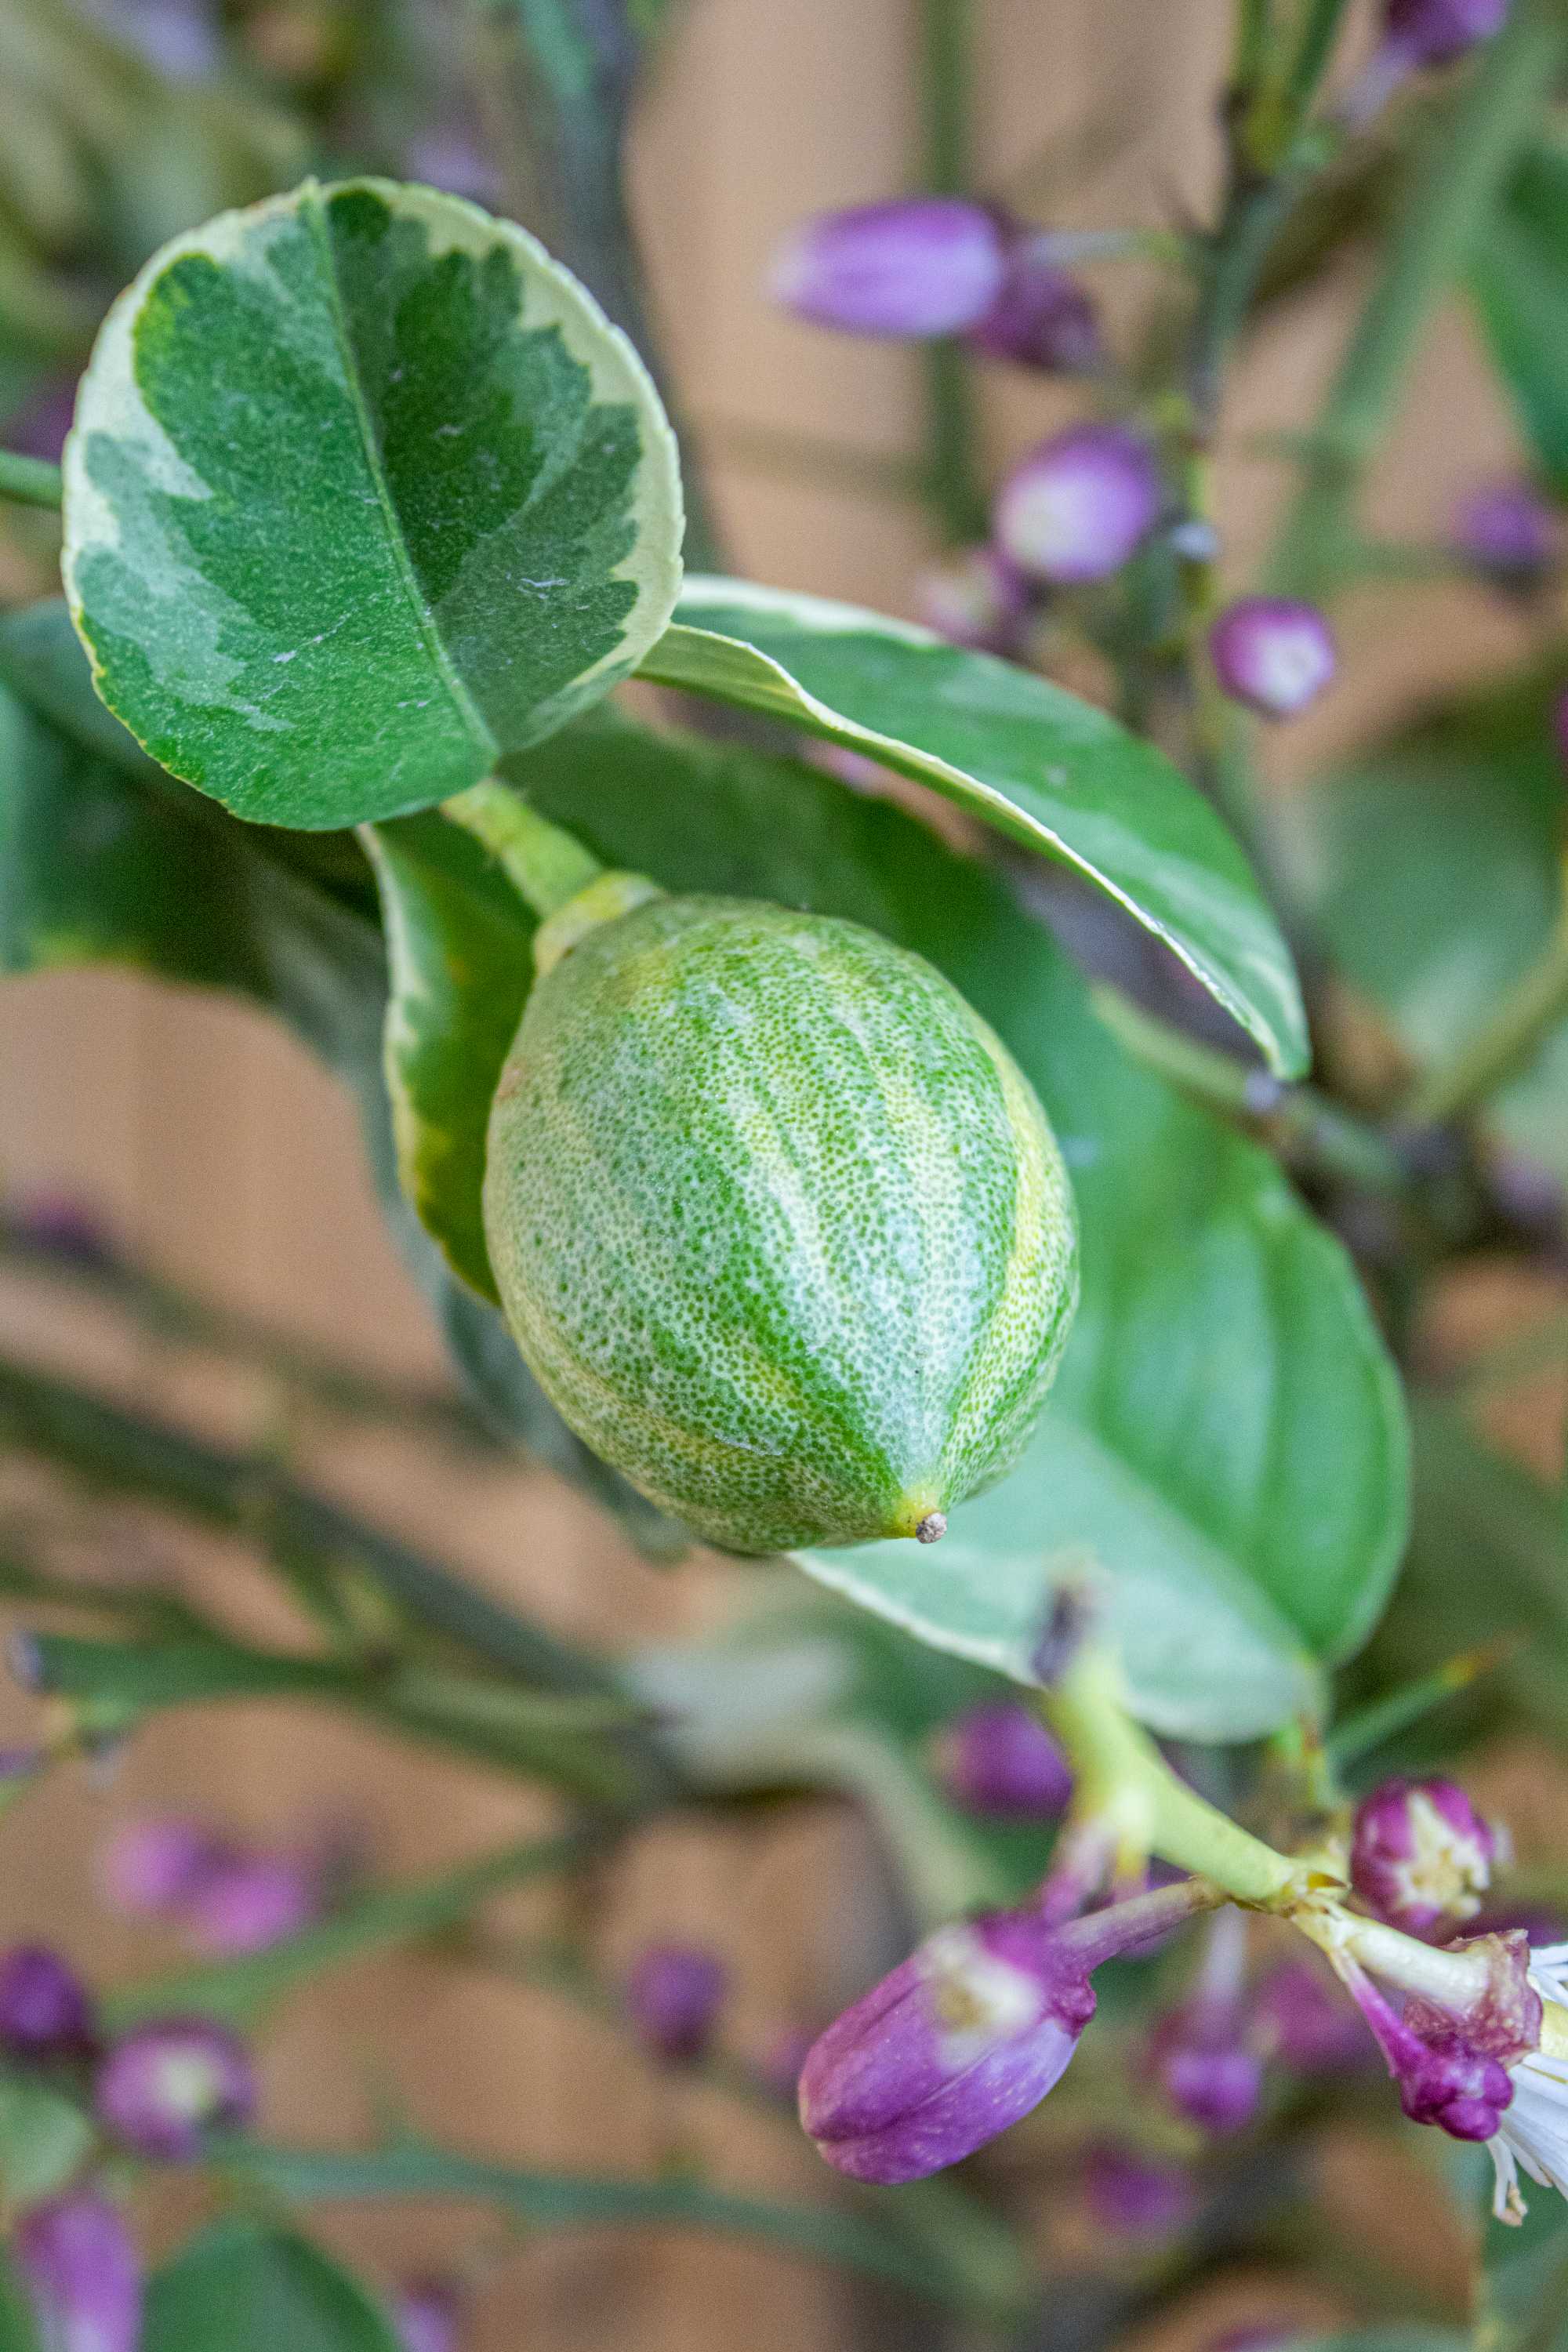 [RESTPOSTEN] Zitronenbaum "Panaché" - Buntlaubige Zitrone 